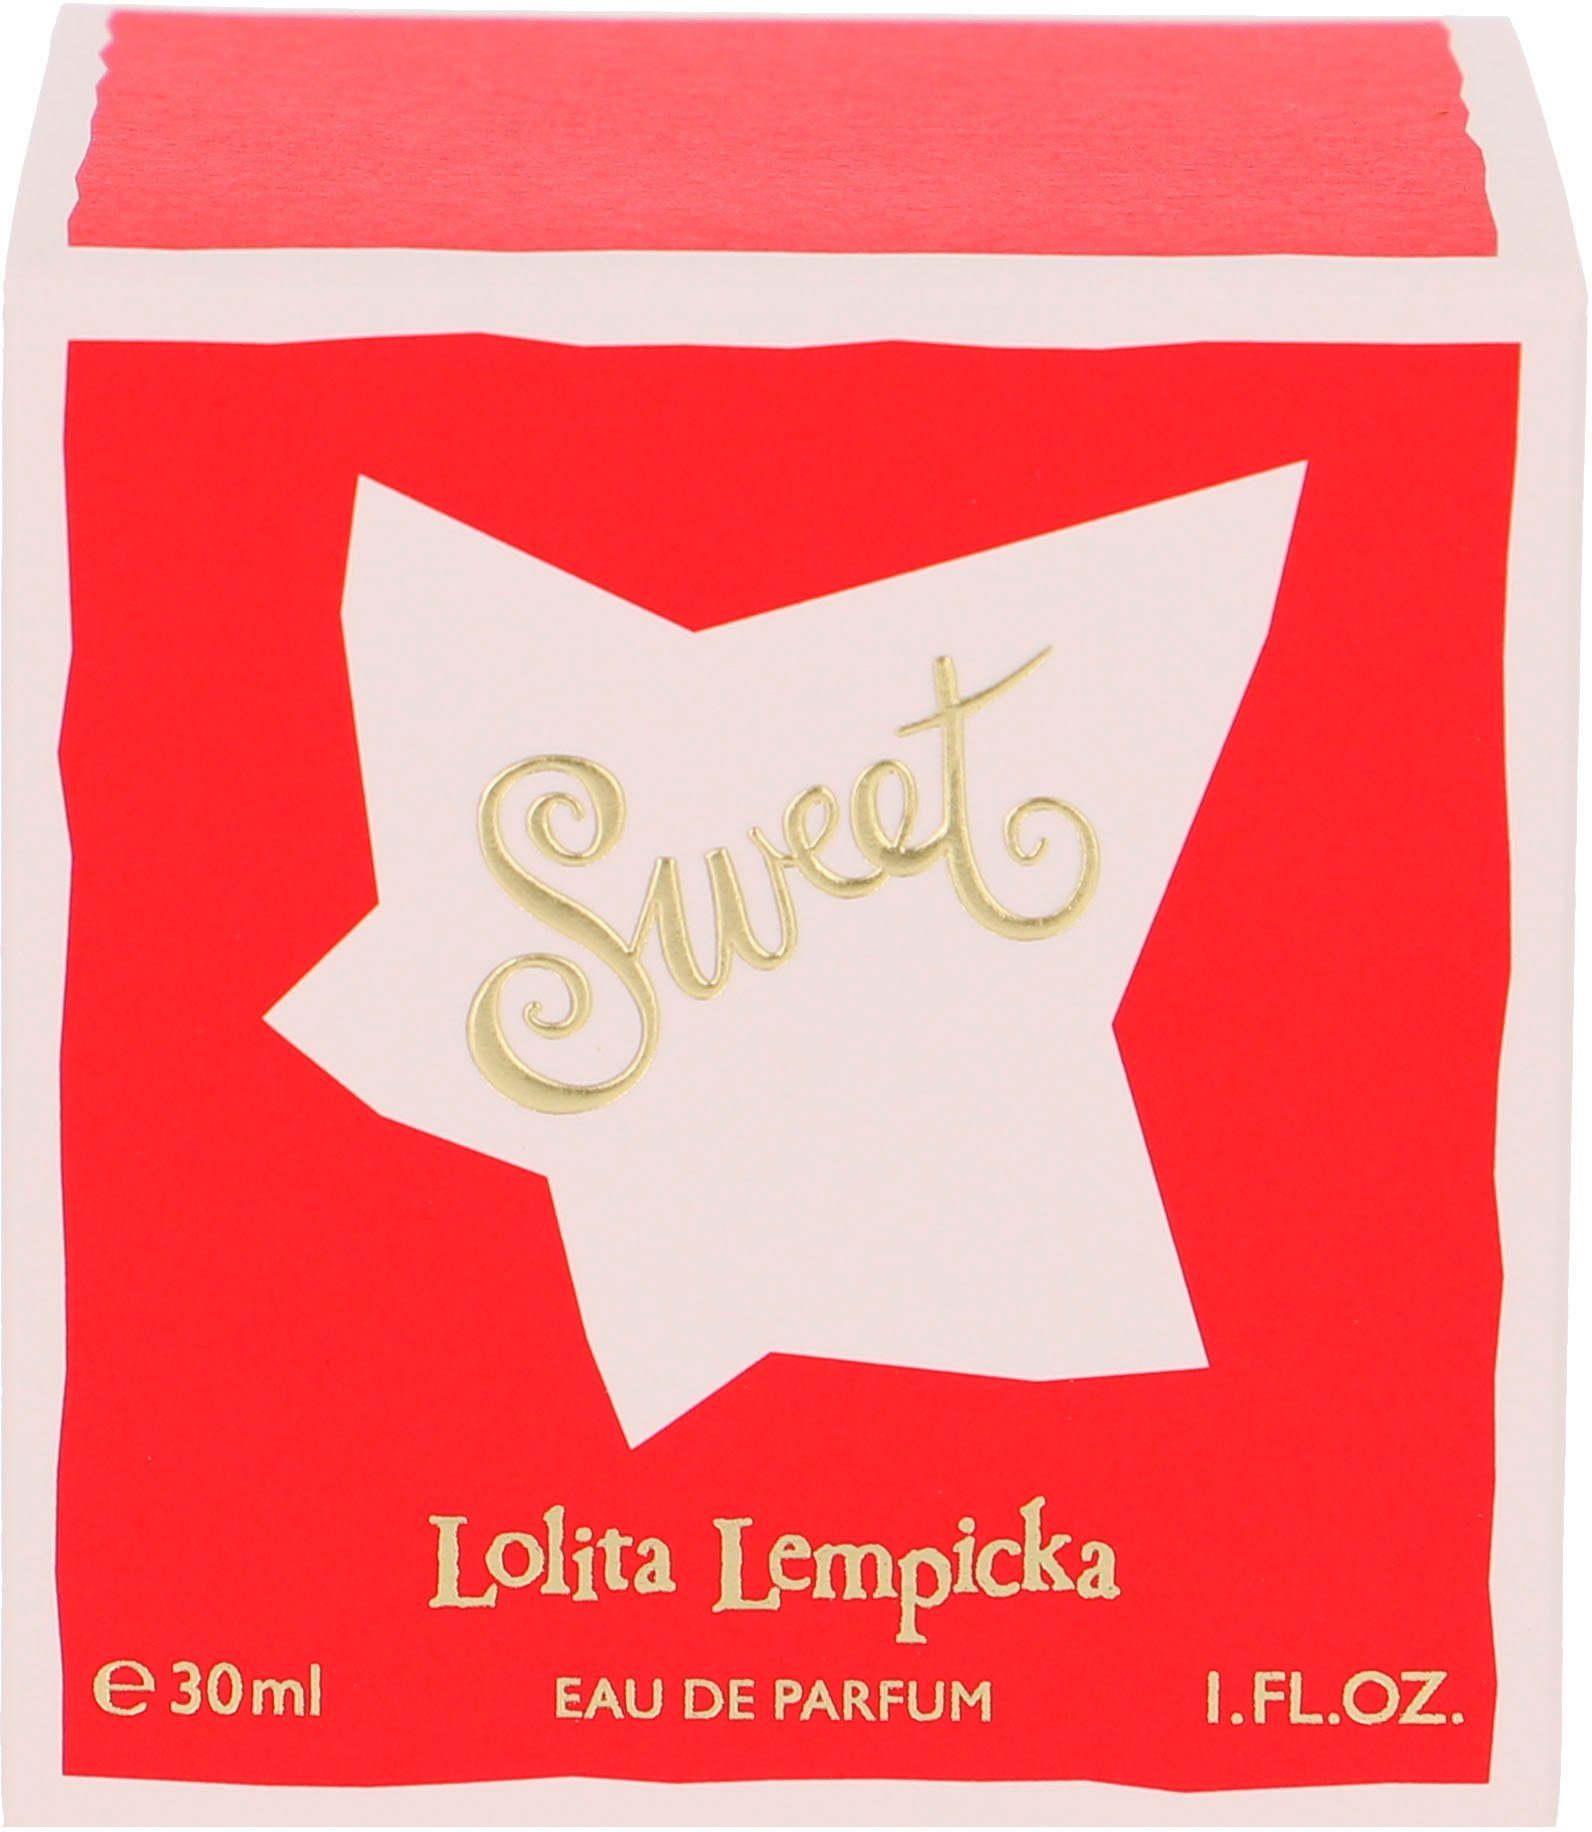 Lolita Lempicka Eau Lolita de Sweet Lempicka Parfum